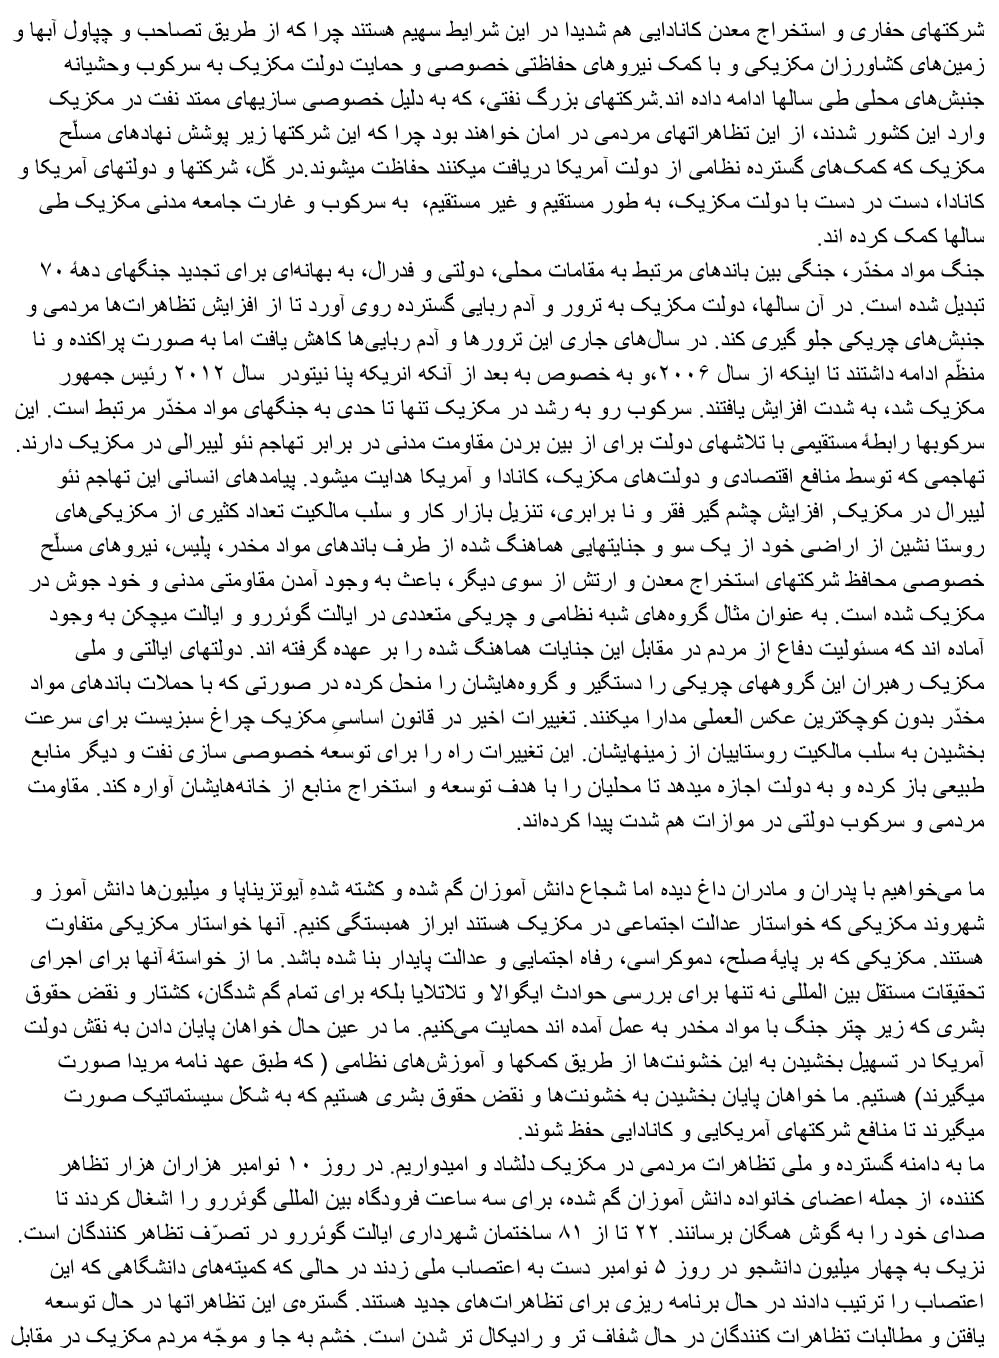 Farsi statement part 2